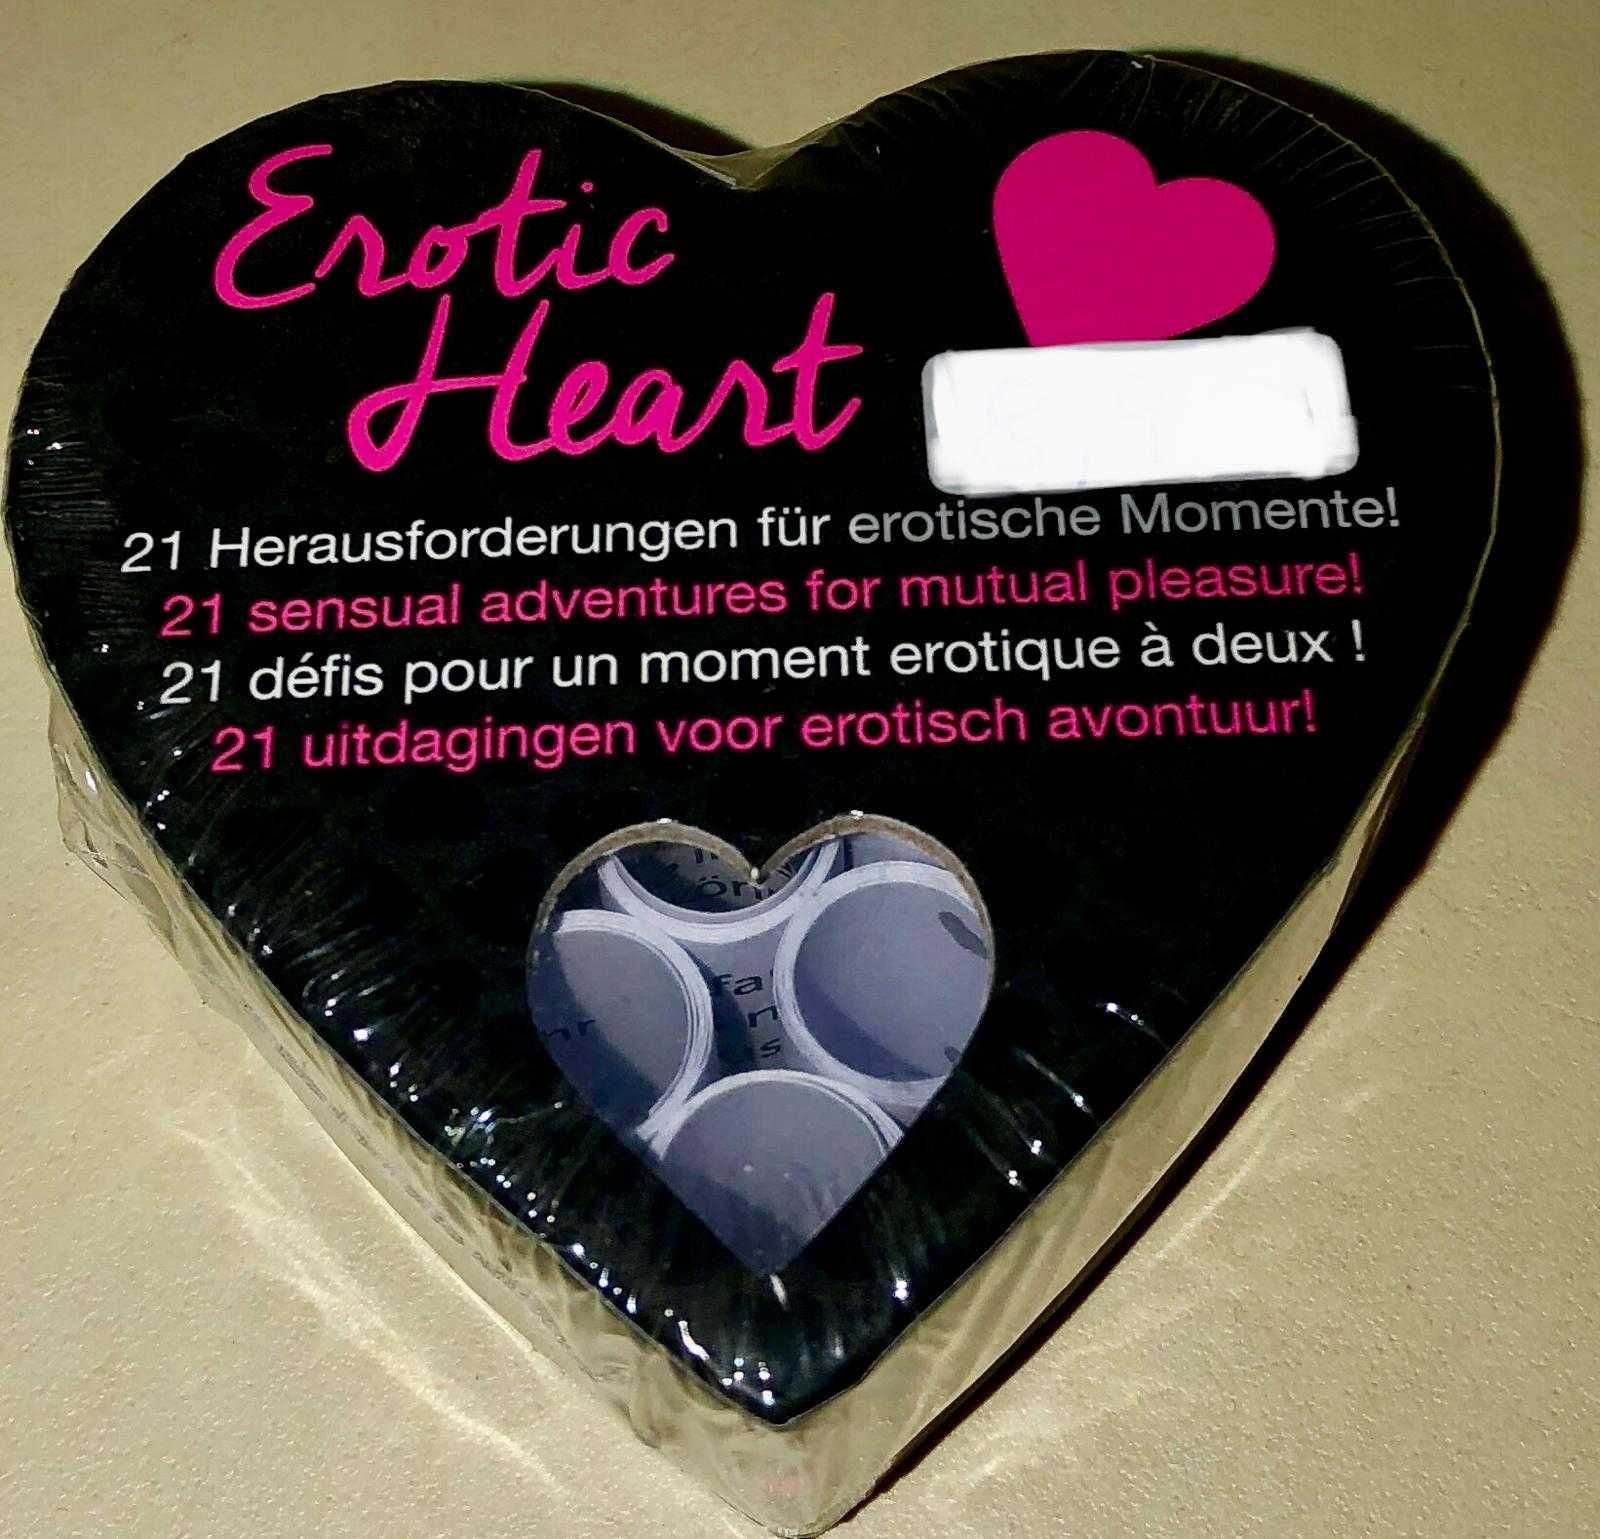 Erotic heart 21 aventuri